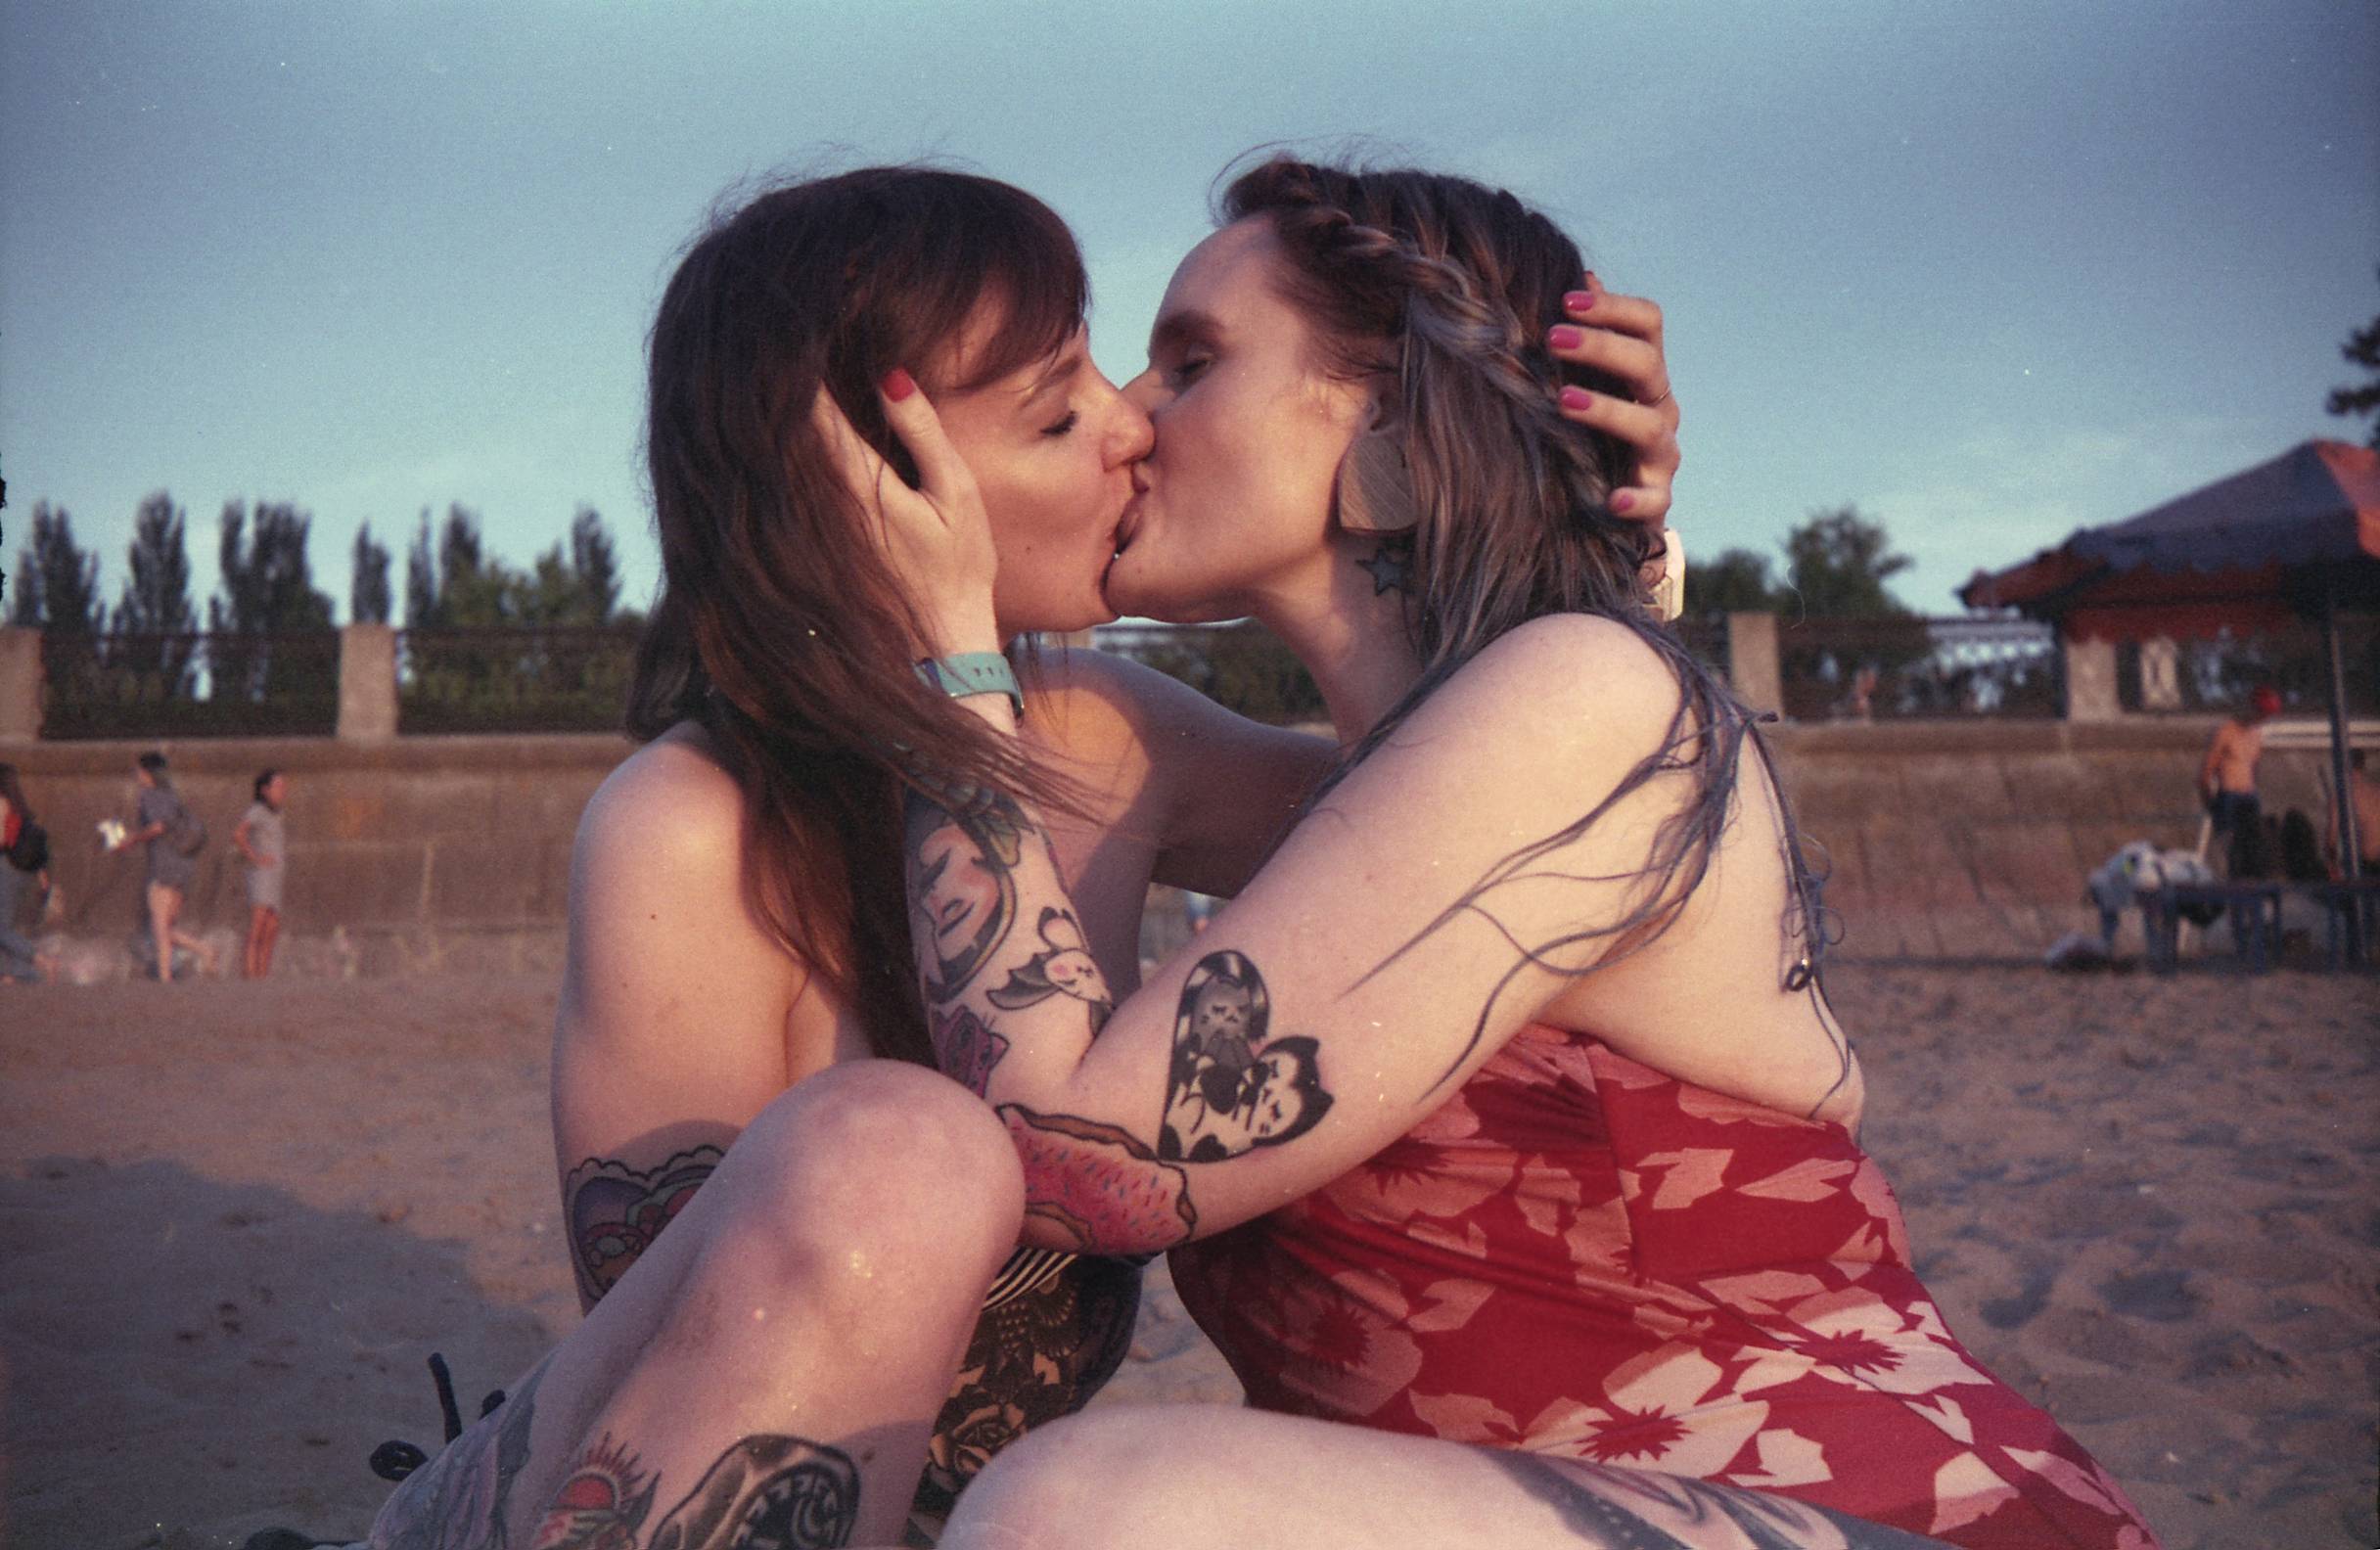 Girls kissing girls photo